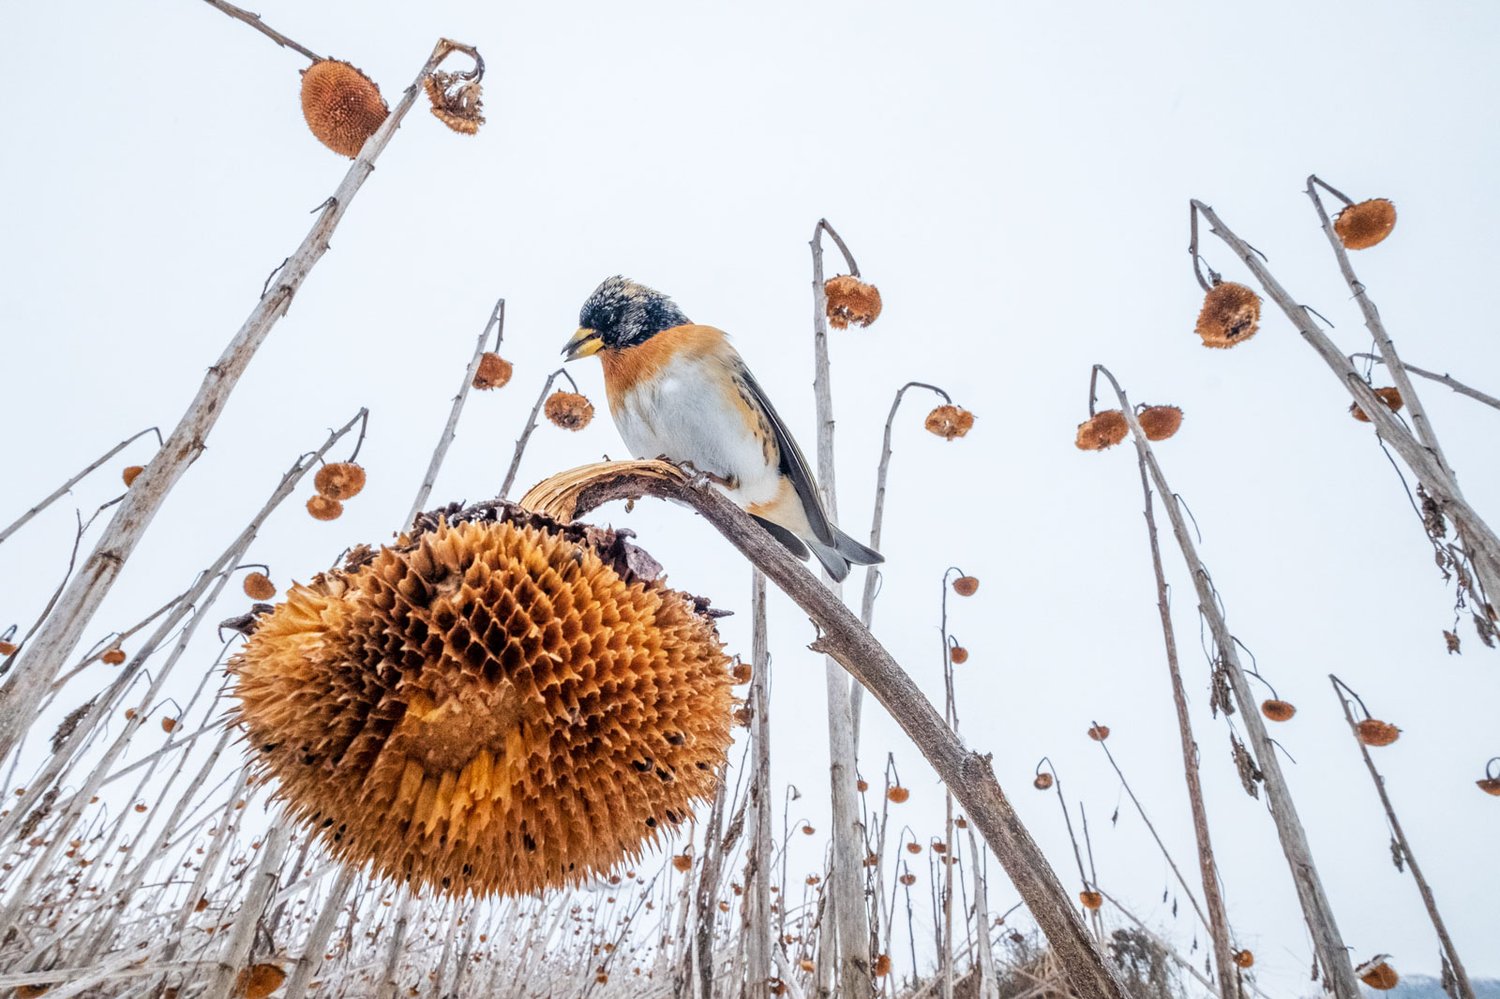 'Sunflower Paradise' by Mateusz Piesiak